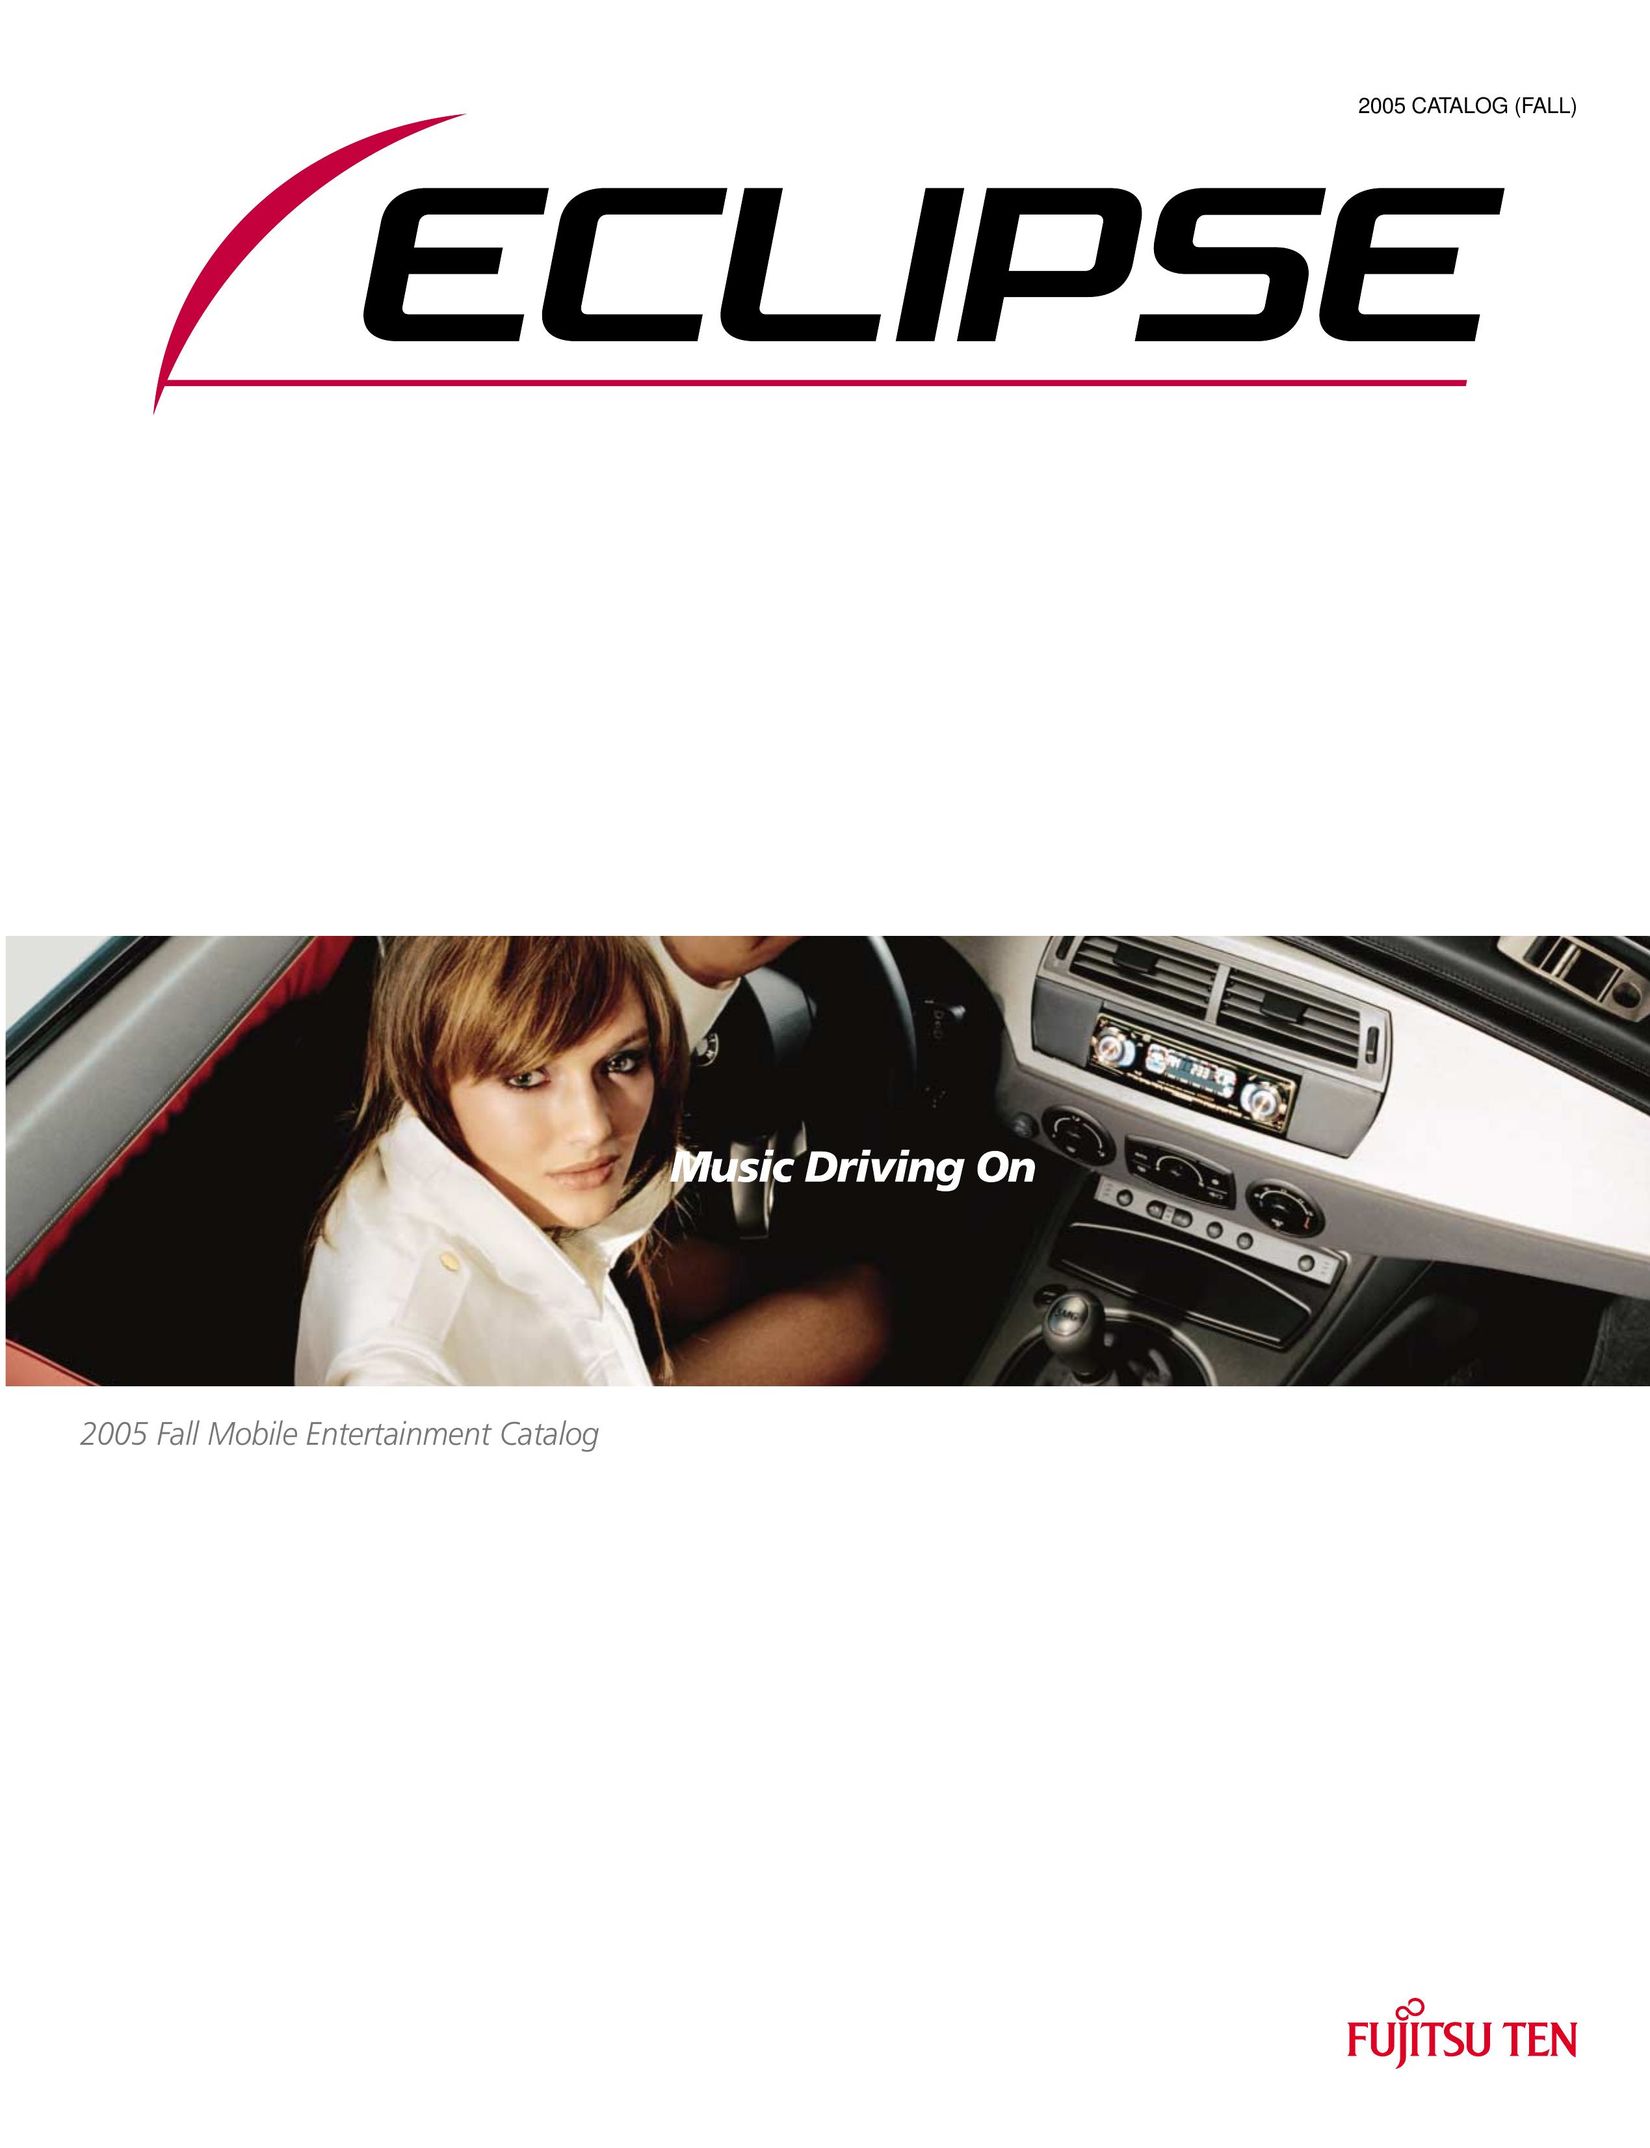 Eclipse - Fujitsu Ten SIR-ECL1 MP3 Player User Manual